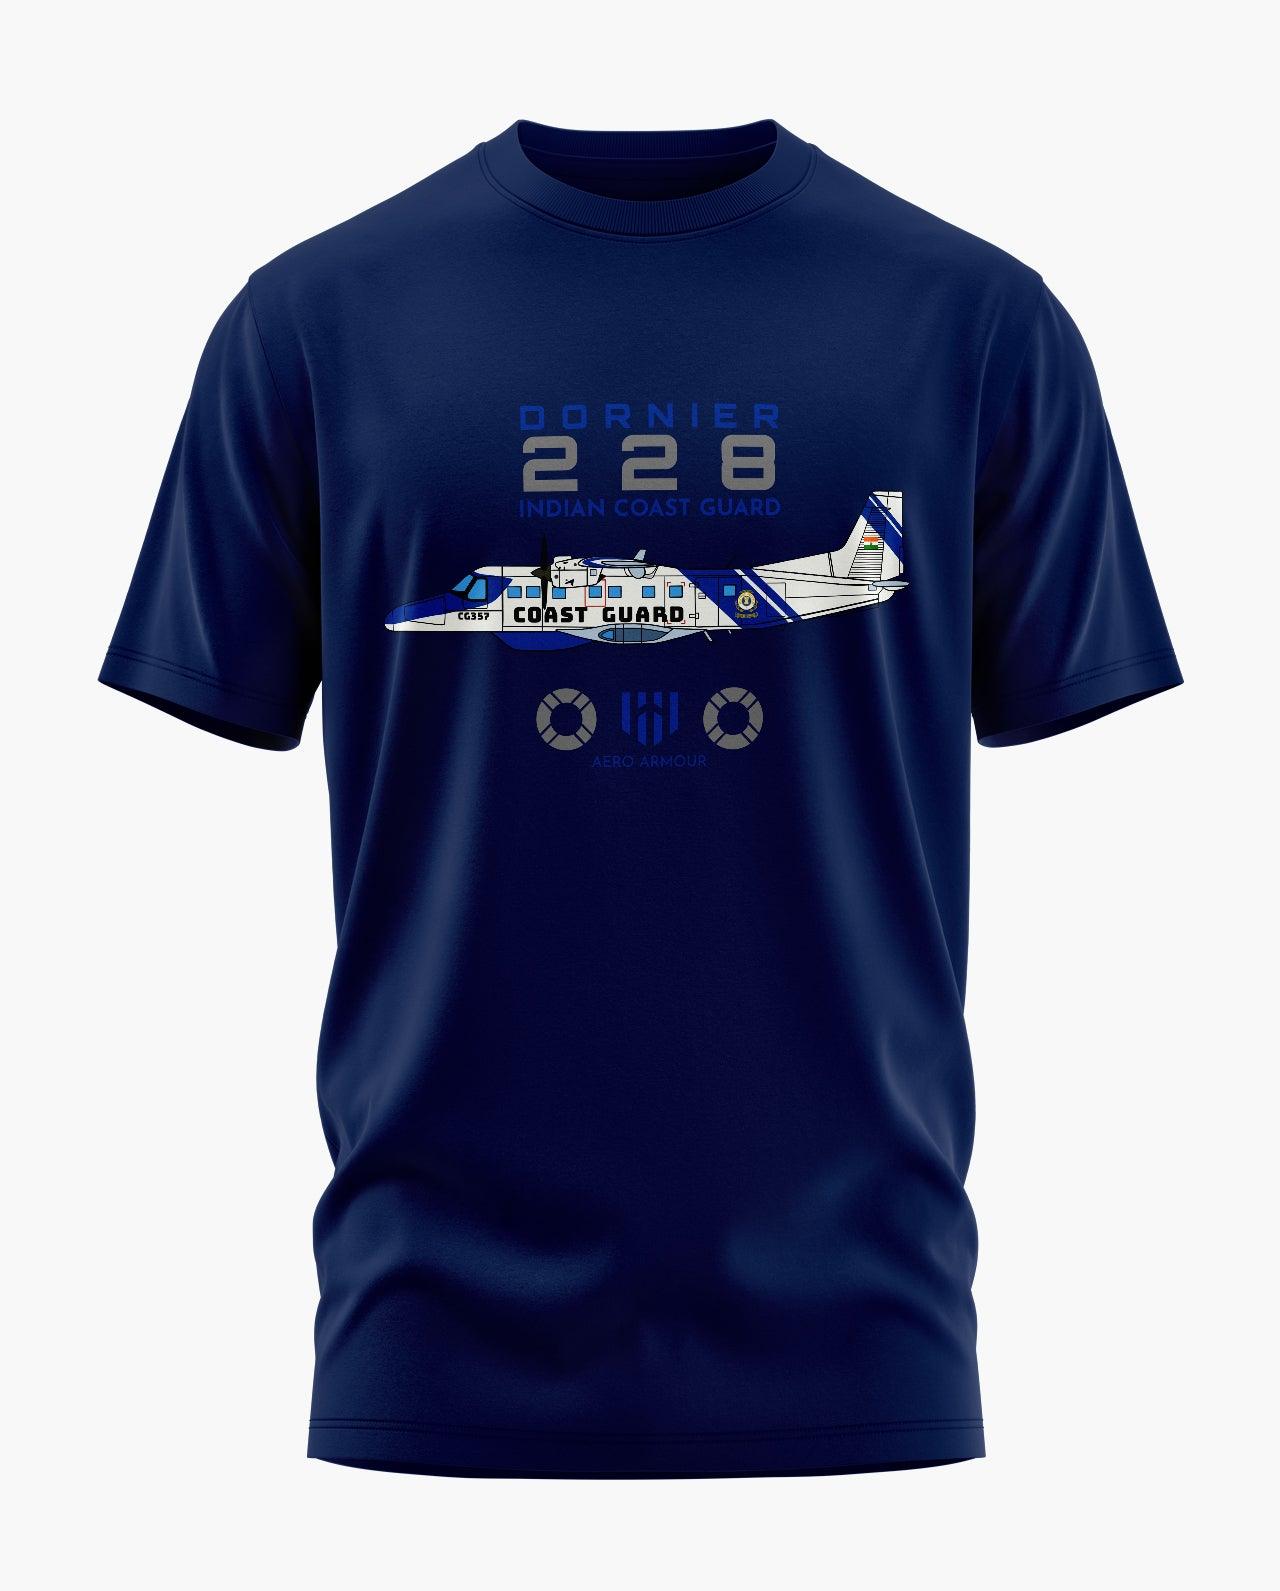 Dornier 228 Indian Coast Guard T-Shirt - Aero Armour